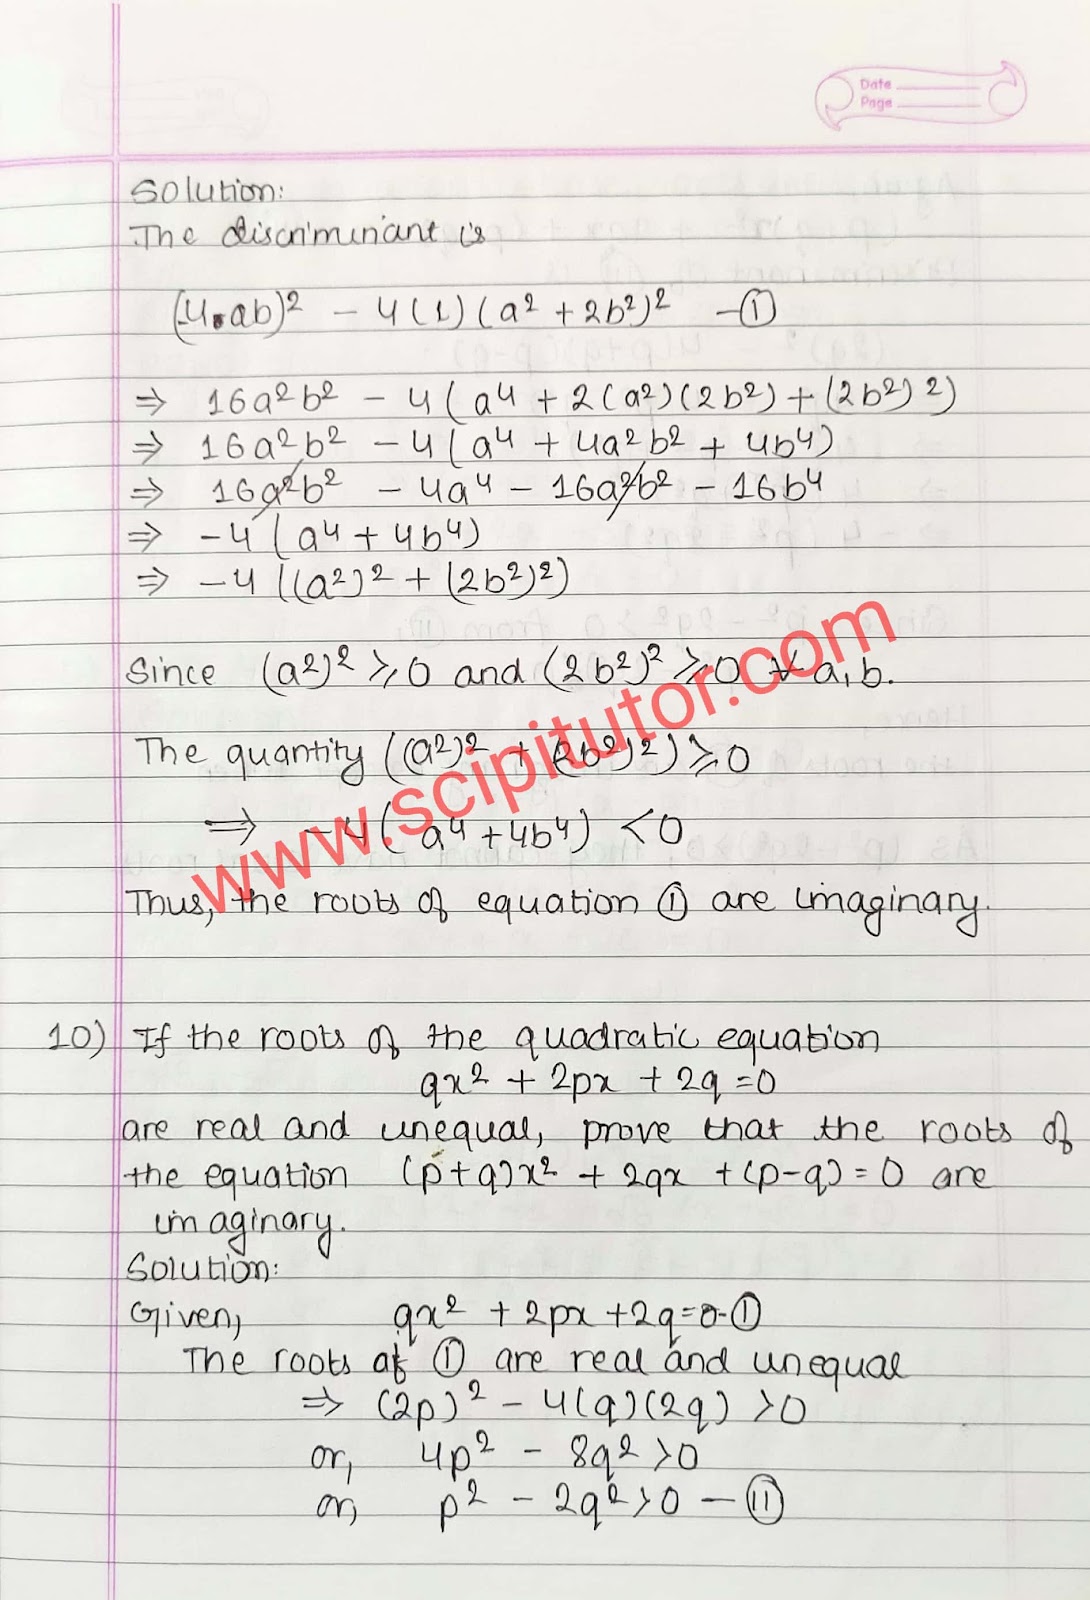 Class 12 Quadratic Equations Exercise 1 Solutions